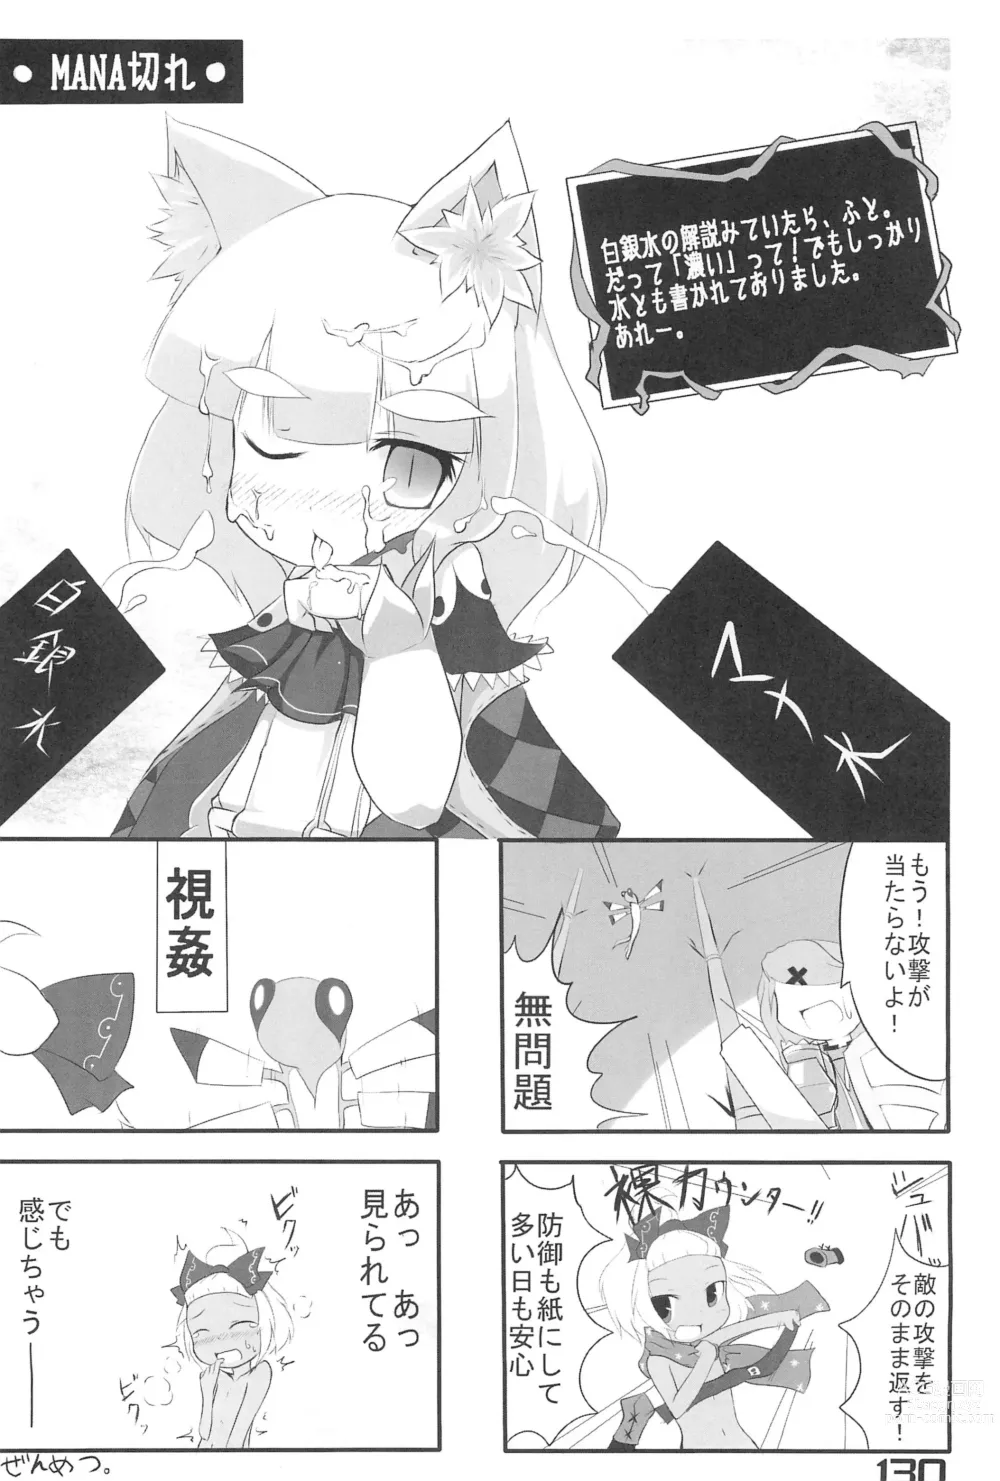 Page 130 of doujinshi Nana*Dra 2